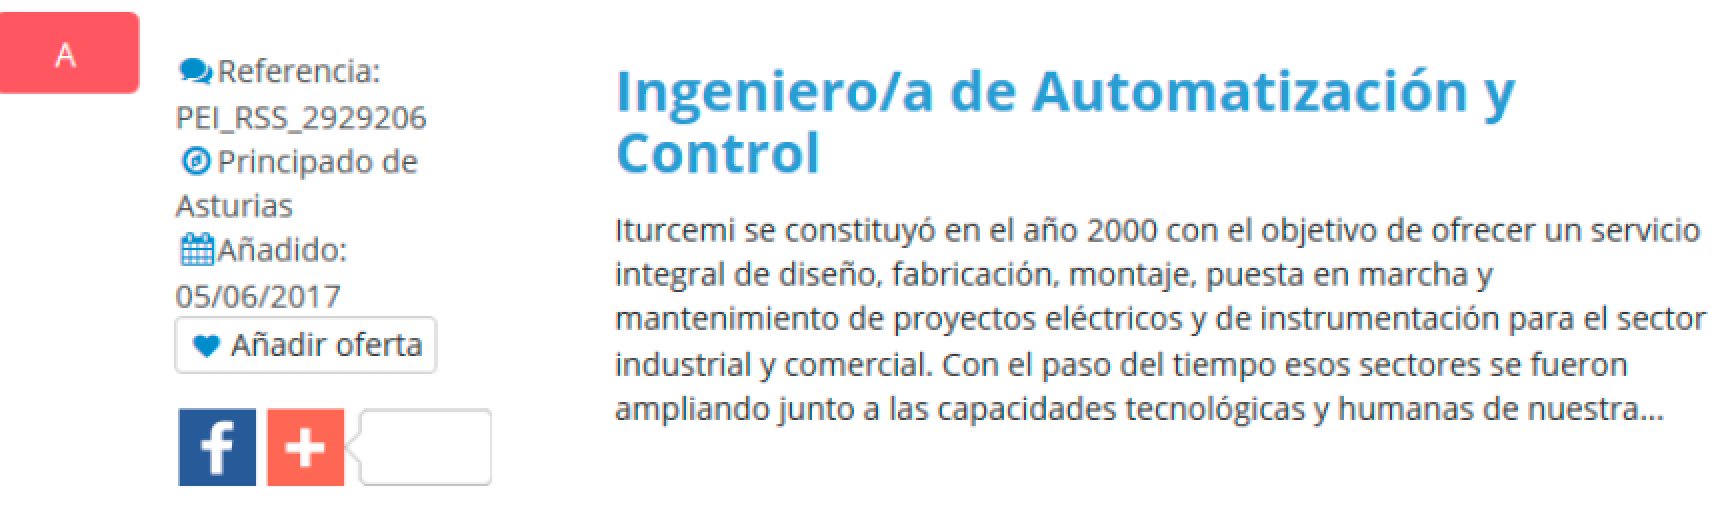 #empleo @proempleoing .es Ingeniero/a de Automatización y Control - Asturias  https://t.co/70KoGtsSaW https://t.co/JKSqwp2E8P